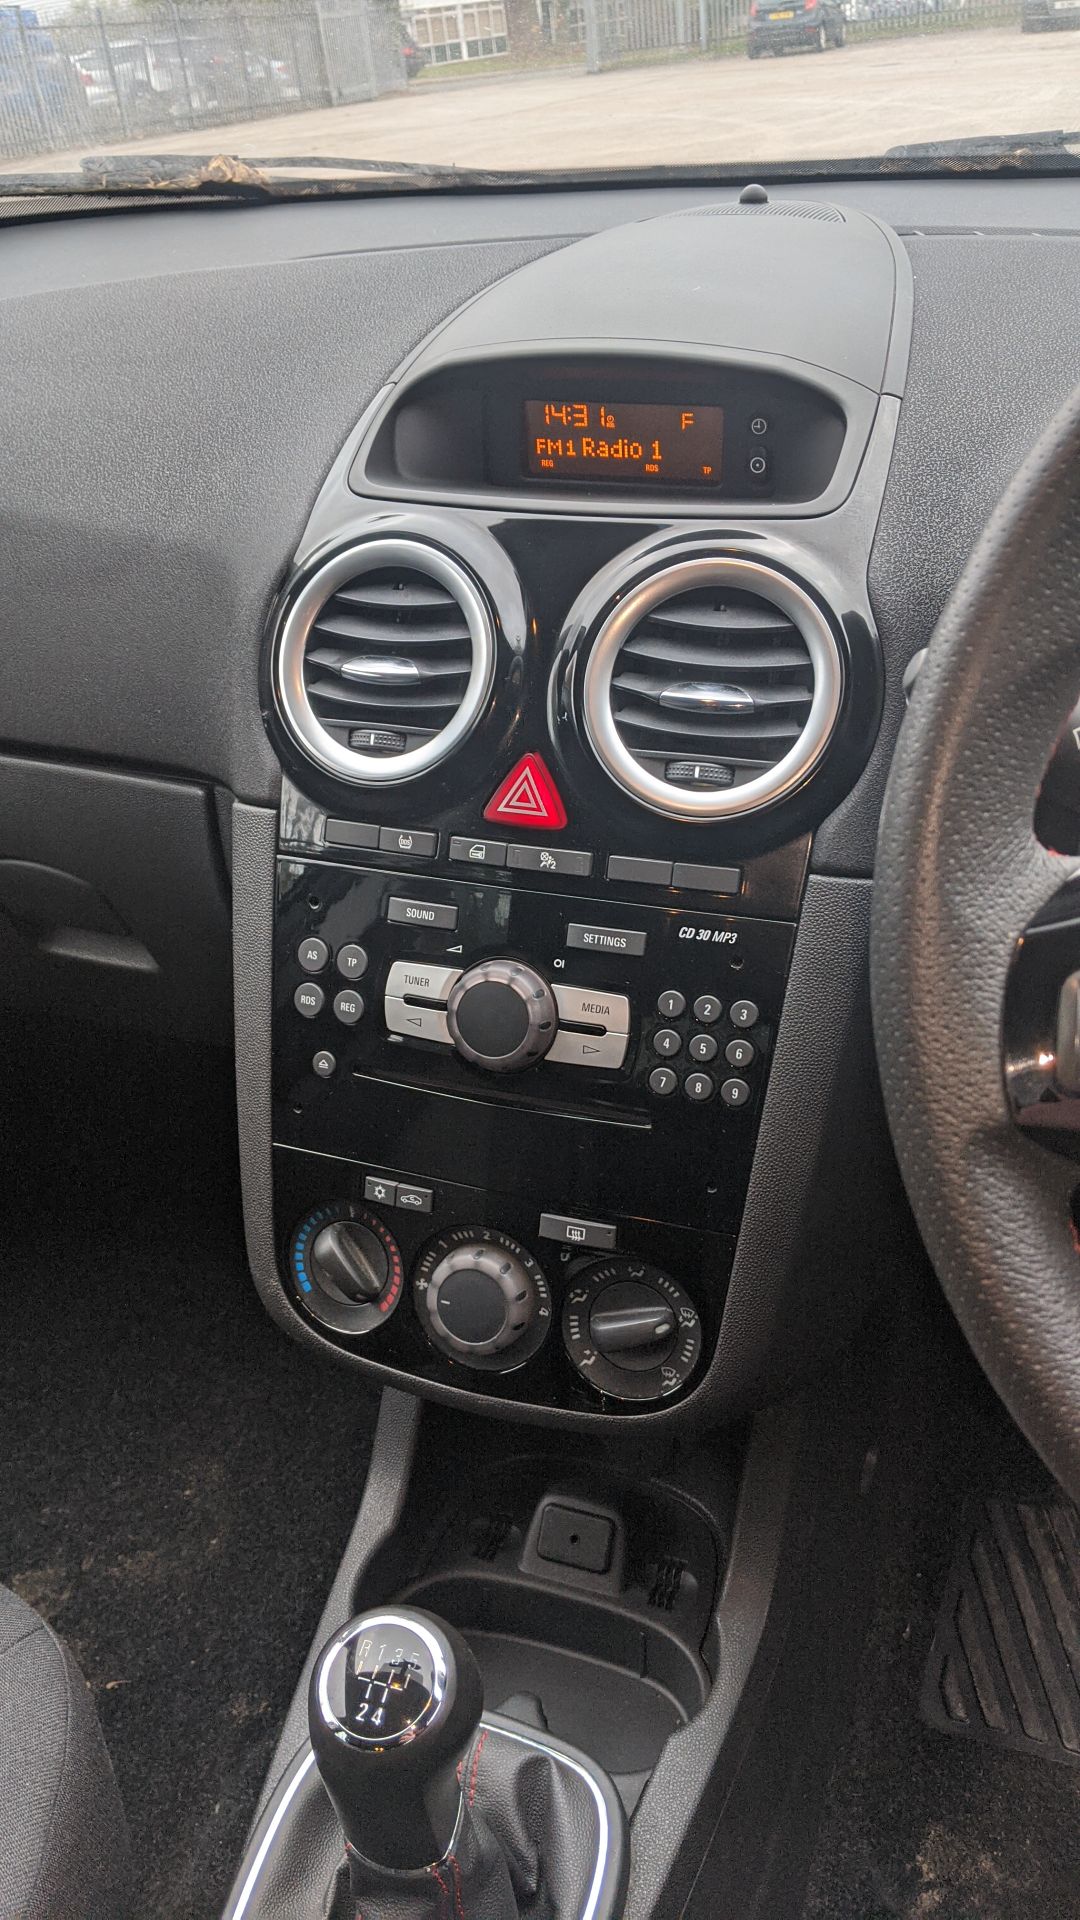 DL64 JUF Vauxhall Corsa 1.2 SXI AC 5 door hatchback, 5 speed manual gearbox, 1229cc petrol engine. - Image 17 of 21